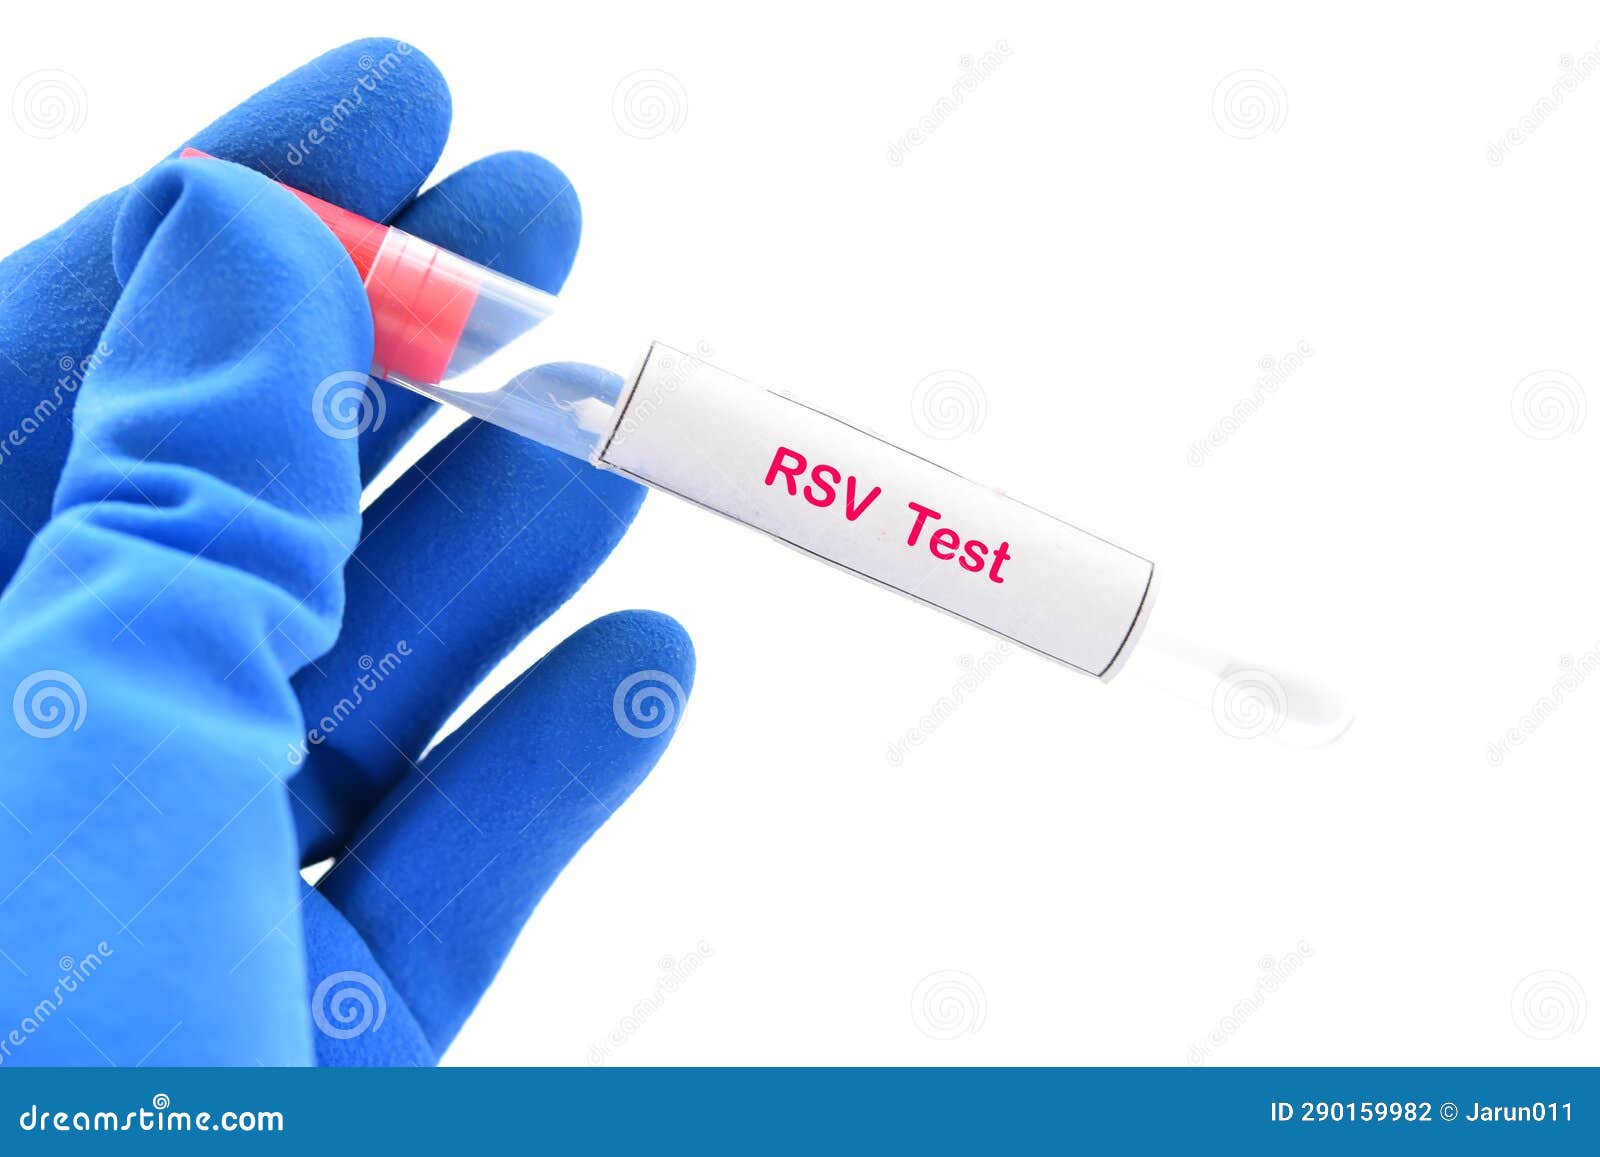 nasopharyngeal swab rsv test